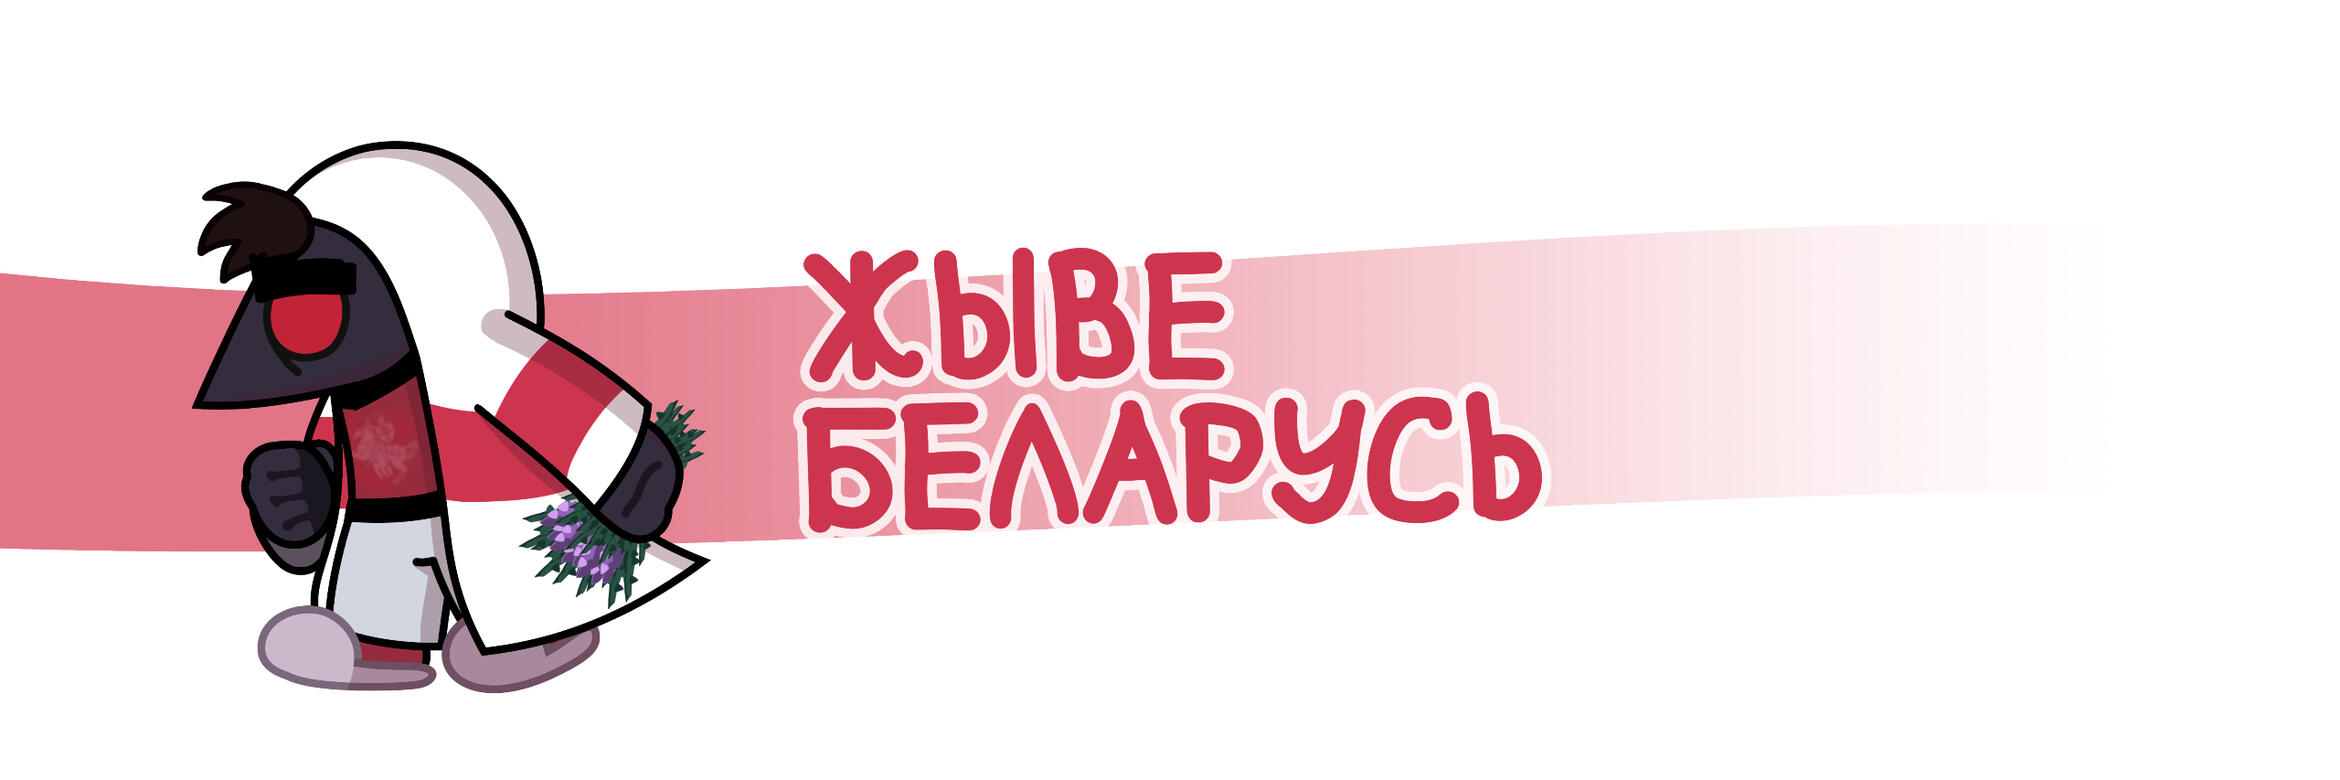 ЖывеБеларусь